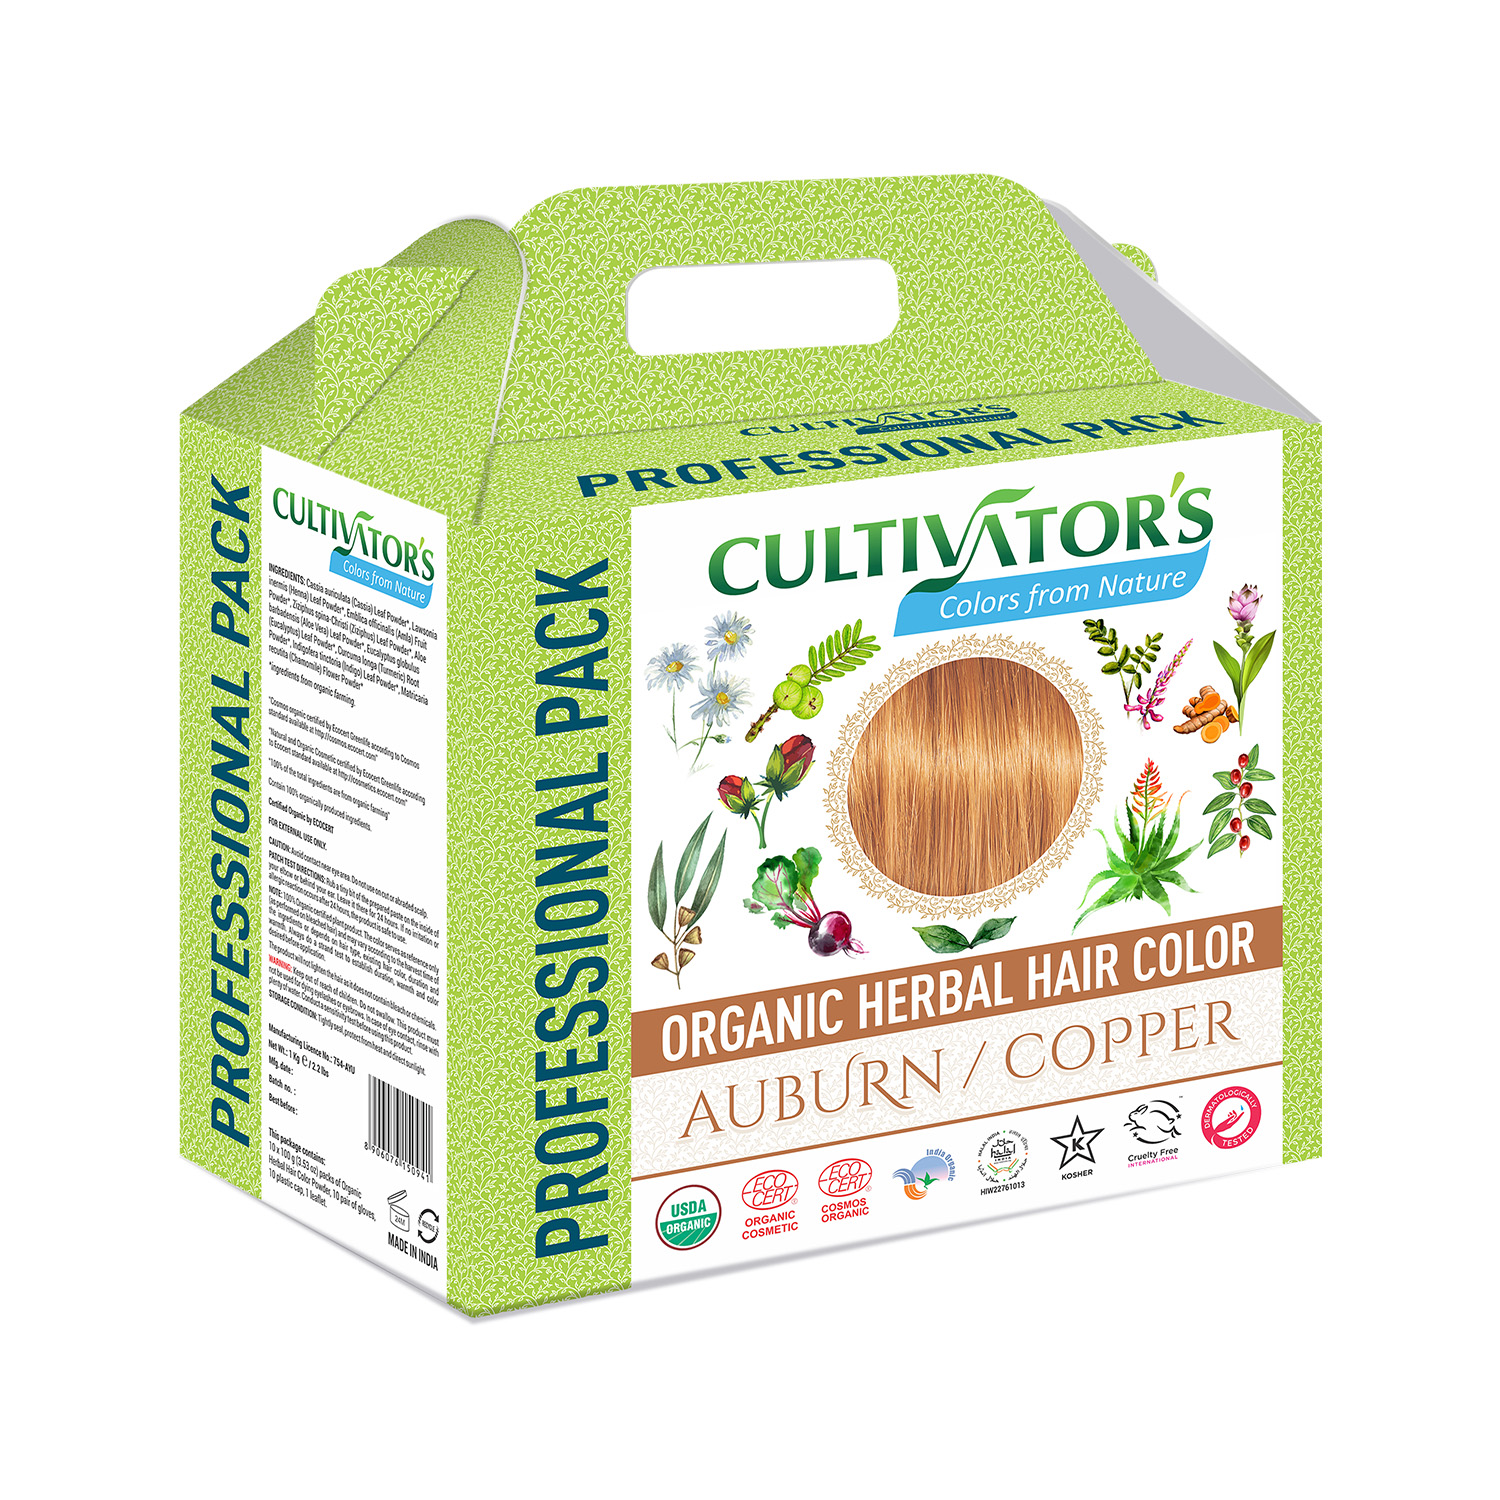 Cultivators Hair Color-Auburn Copper, 1kg - Miraz grossist